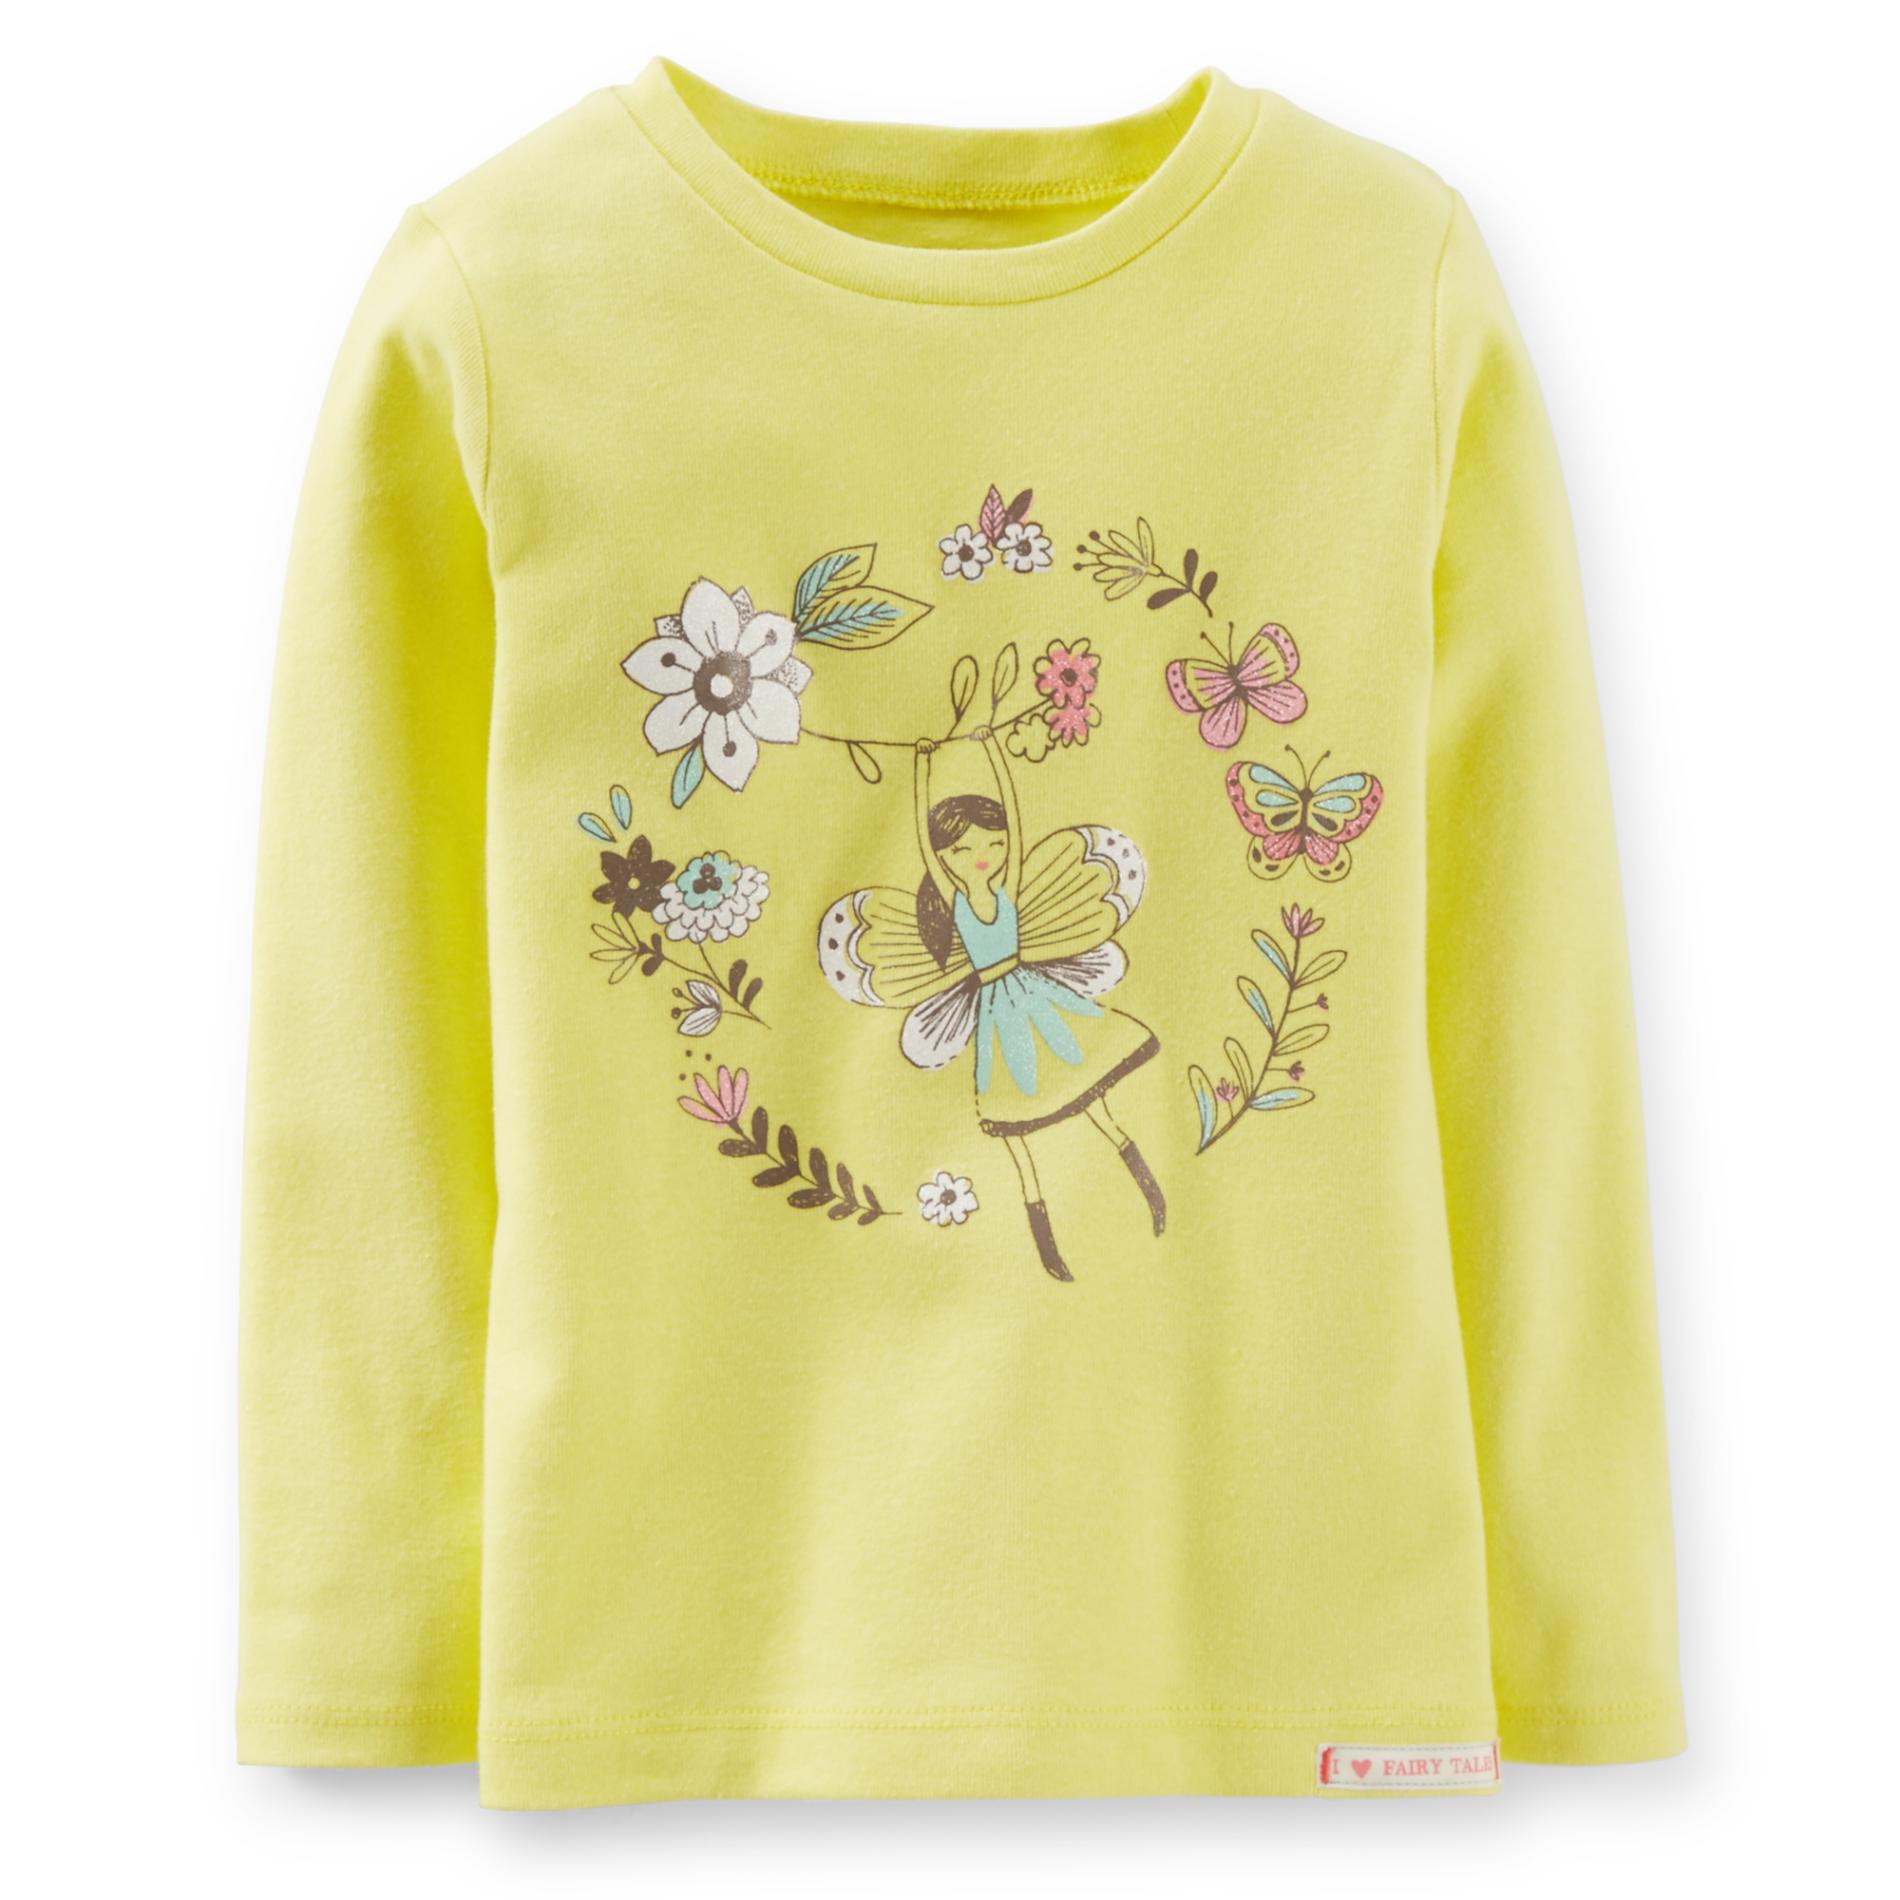 Carter's Toddler Girl's Graphic Shirt - Fairy